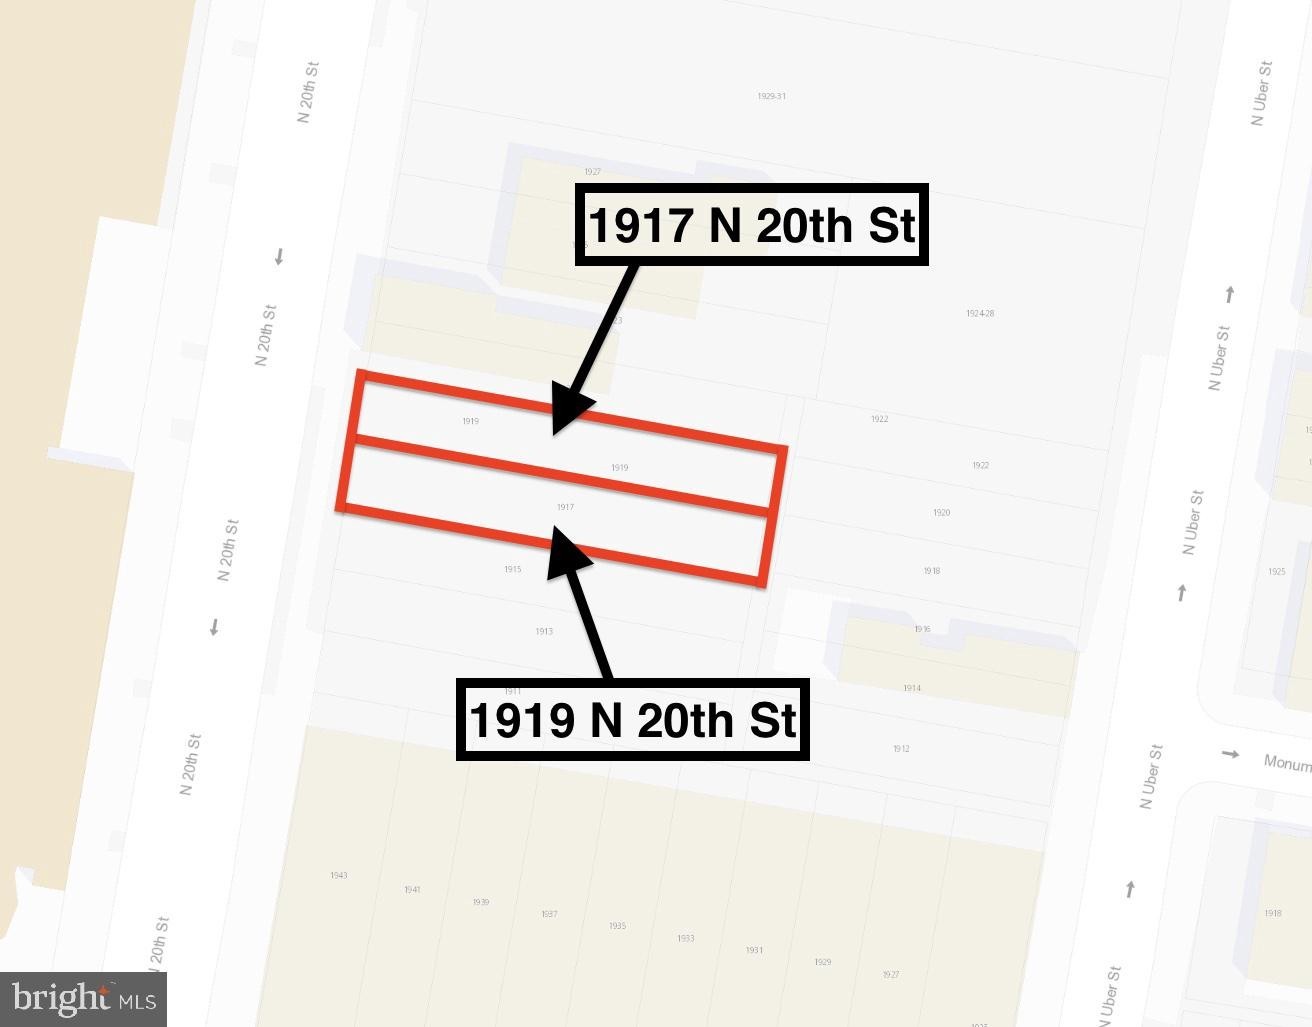 1. 1917-1919 N 20th Street